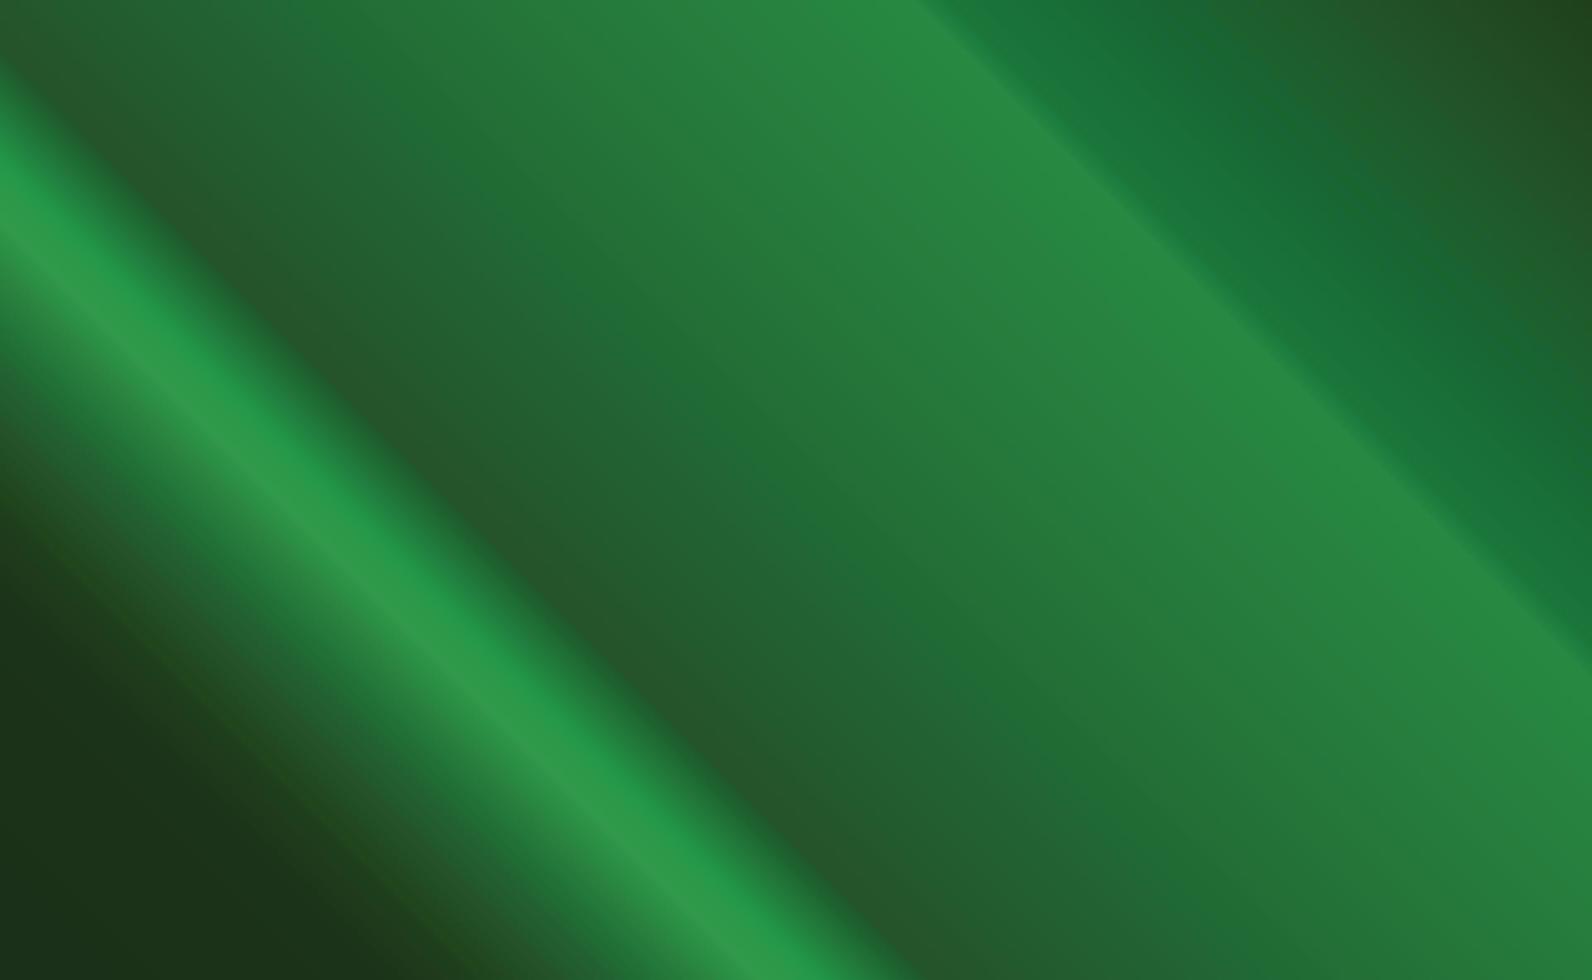 green gradient free background vector design nature